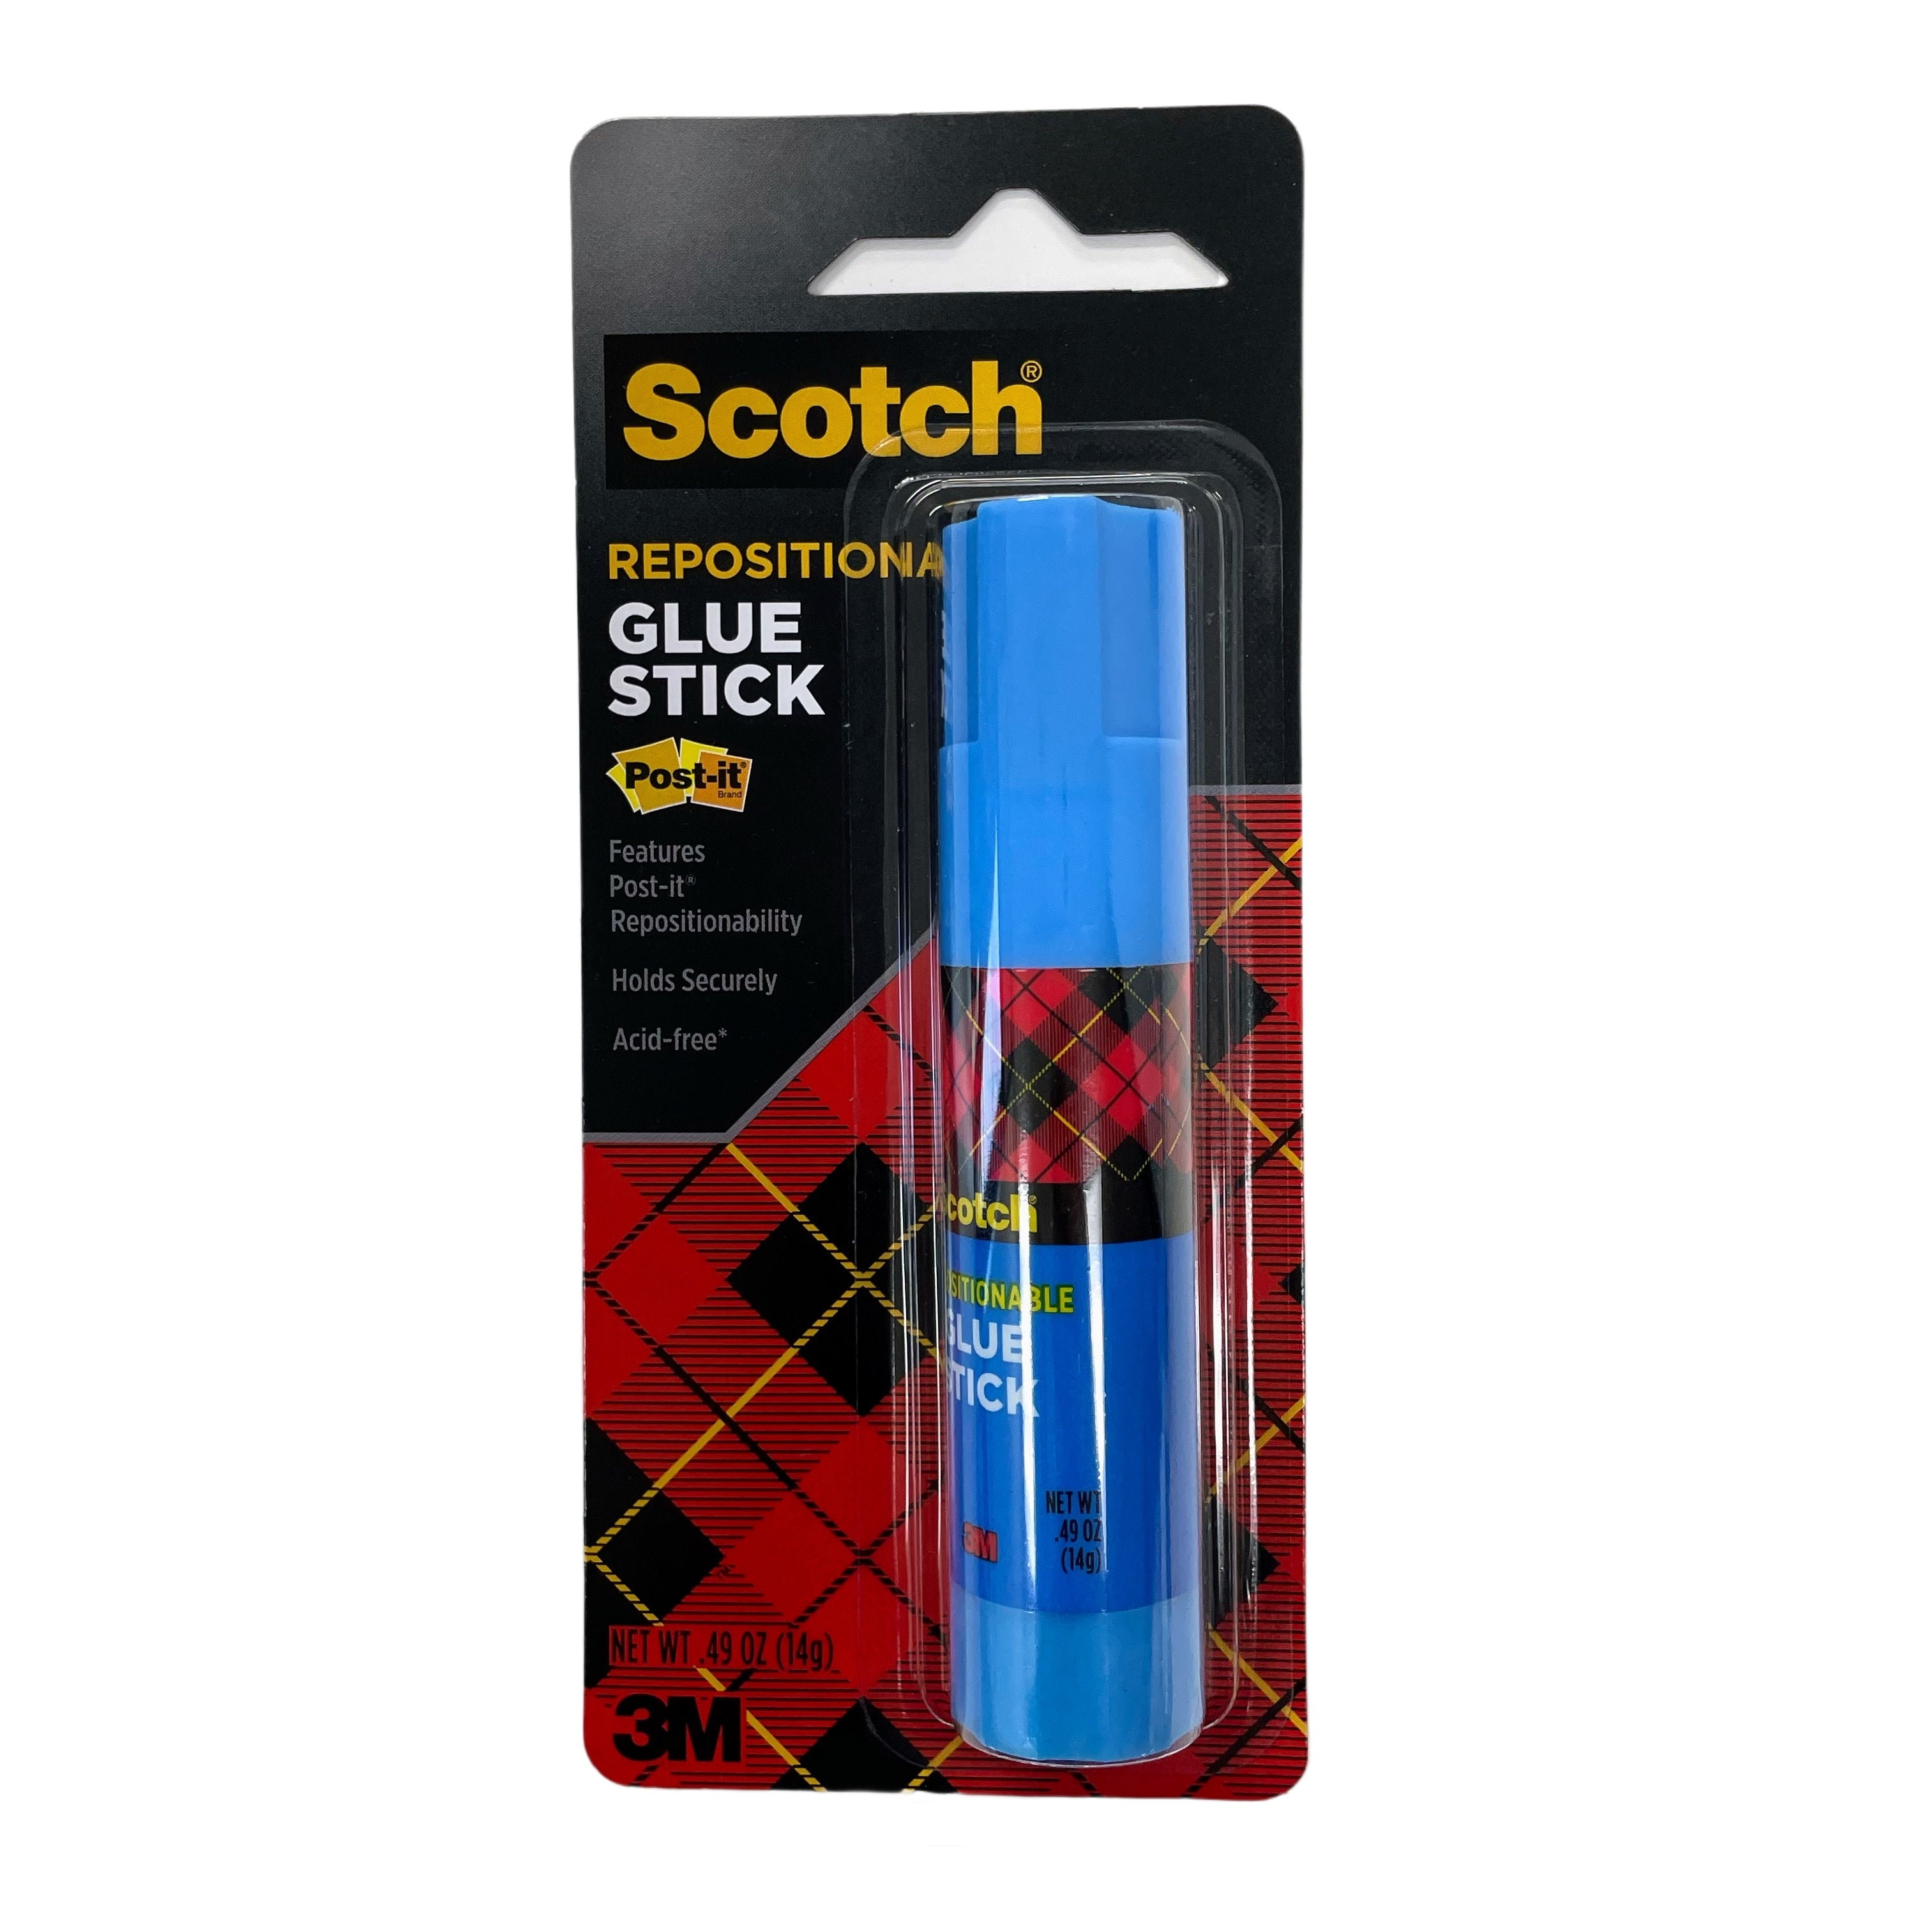 Scotch Repositionable Glue Stick